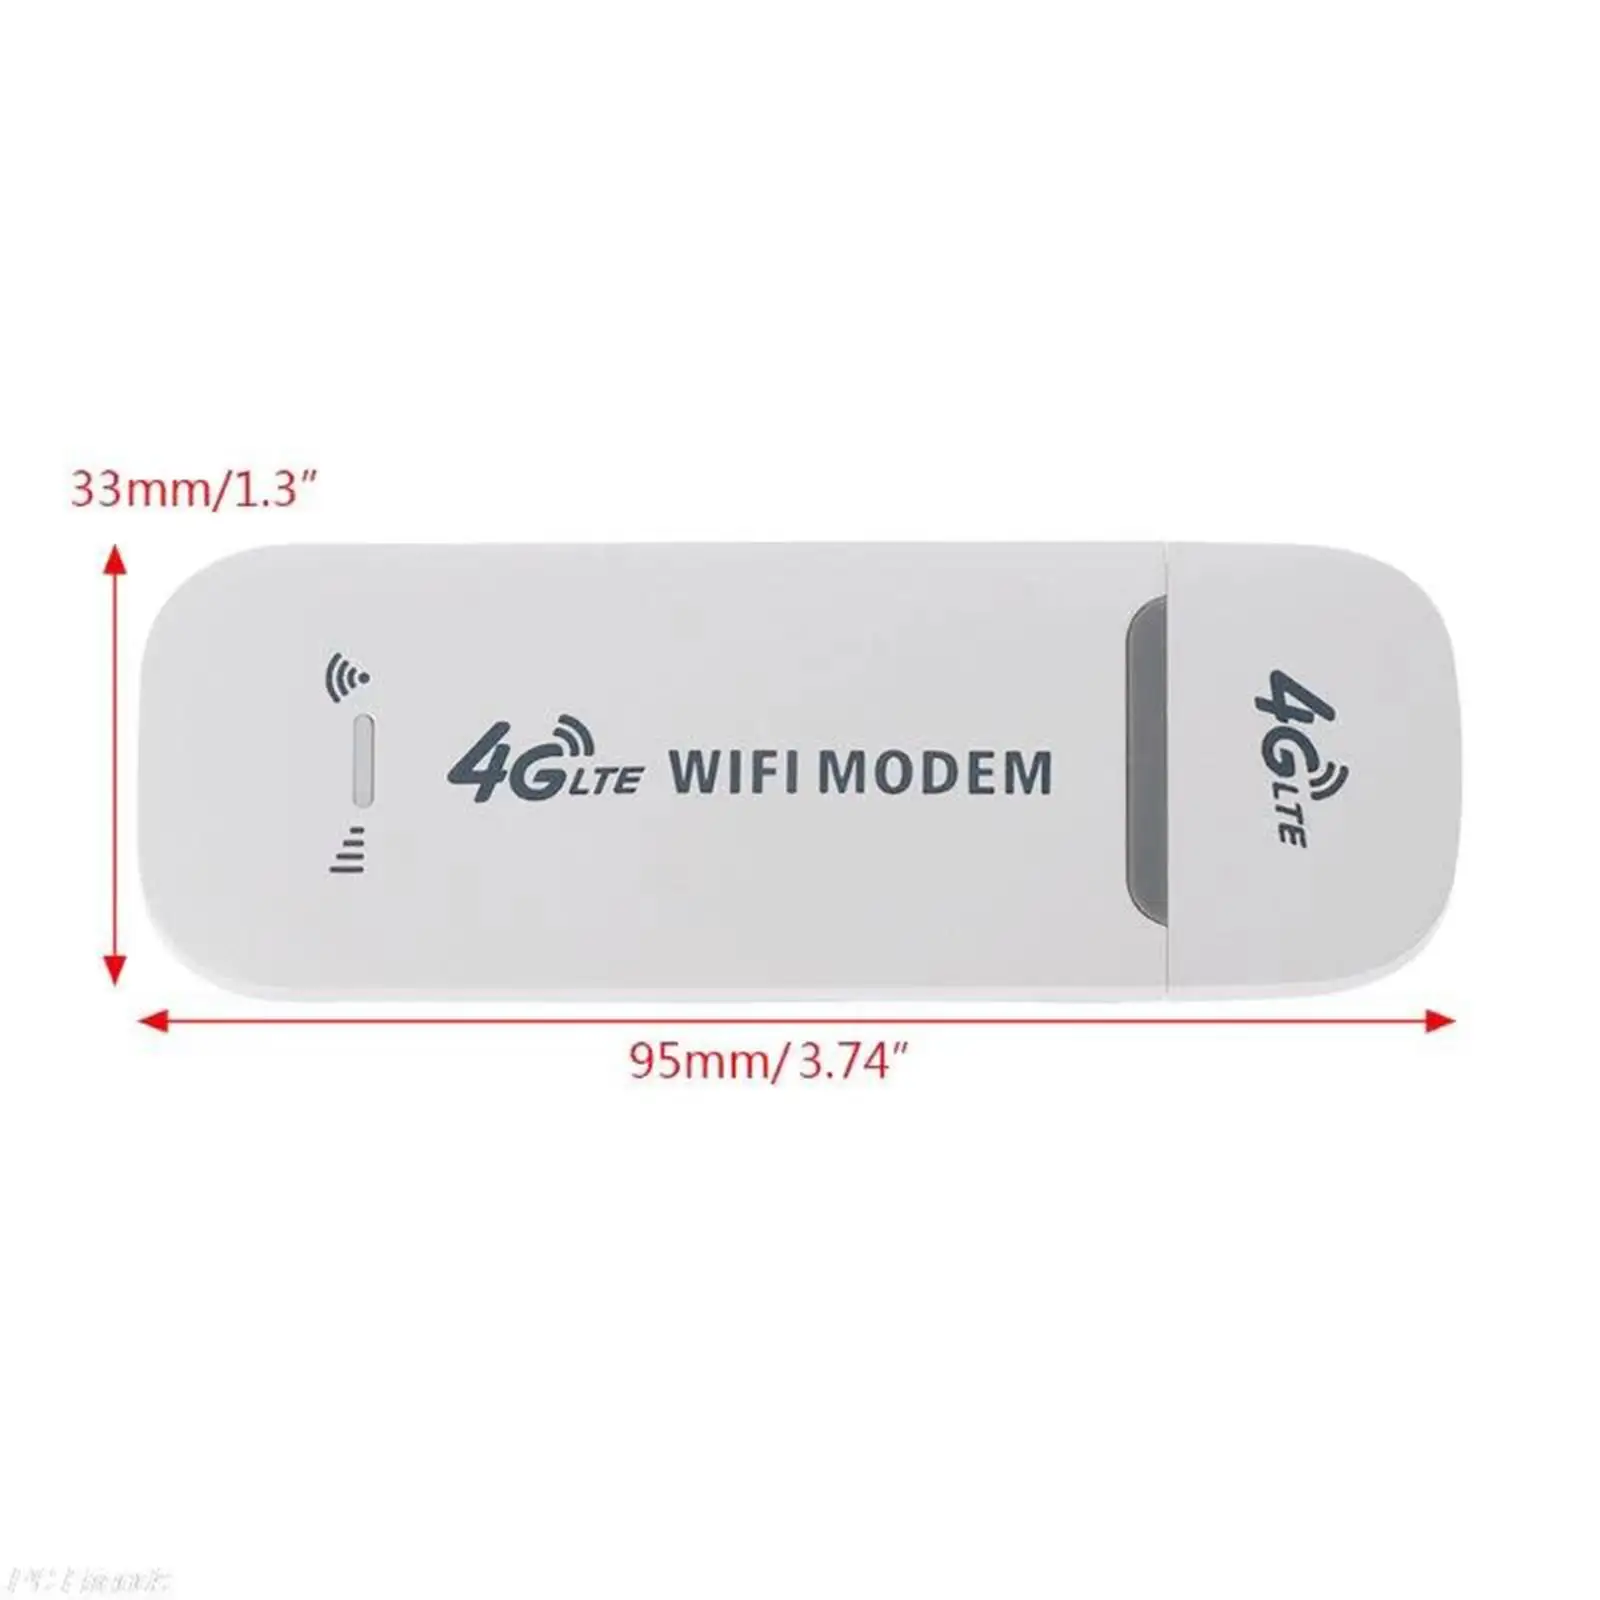 4G LTE USB Modem Dongle Wireless Router Stick Network Card for Desktop PC usb 4g modem sim card